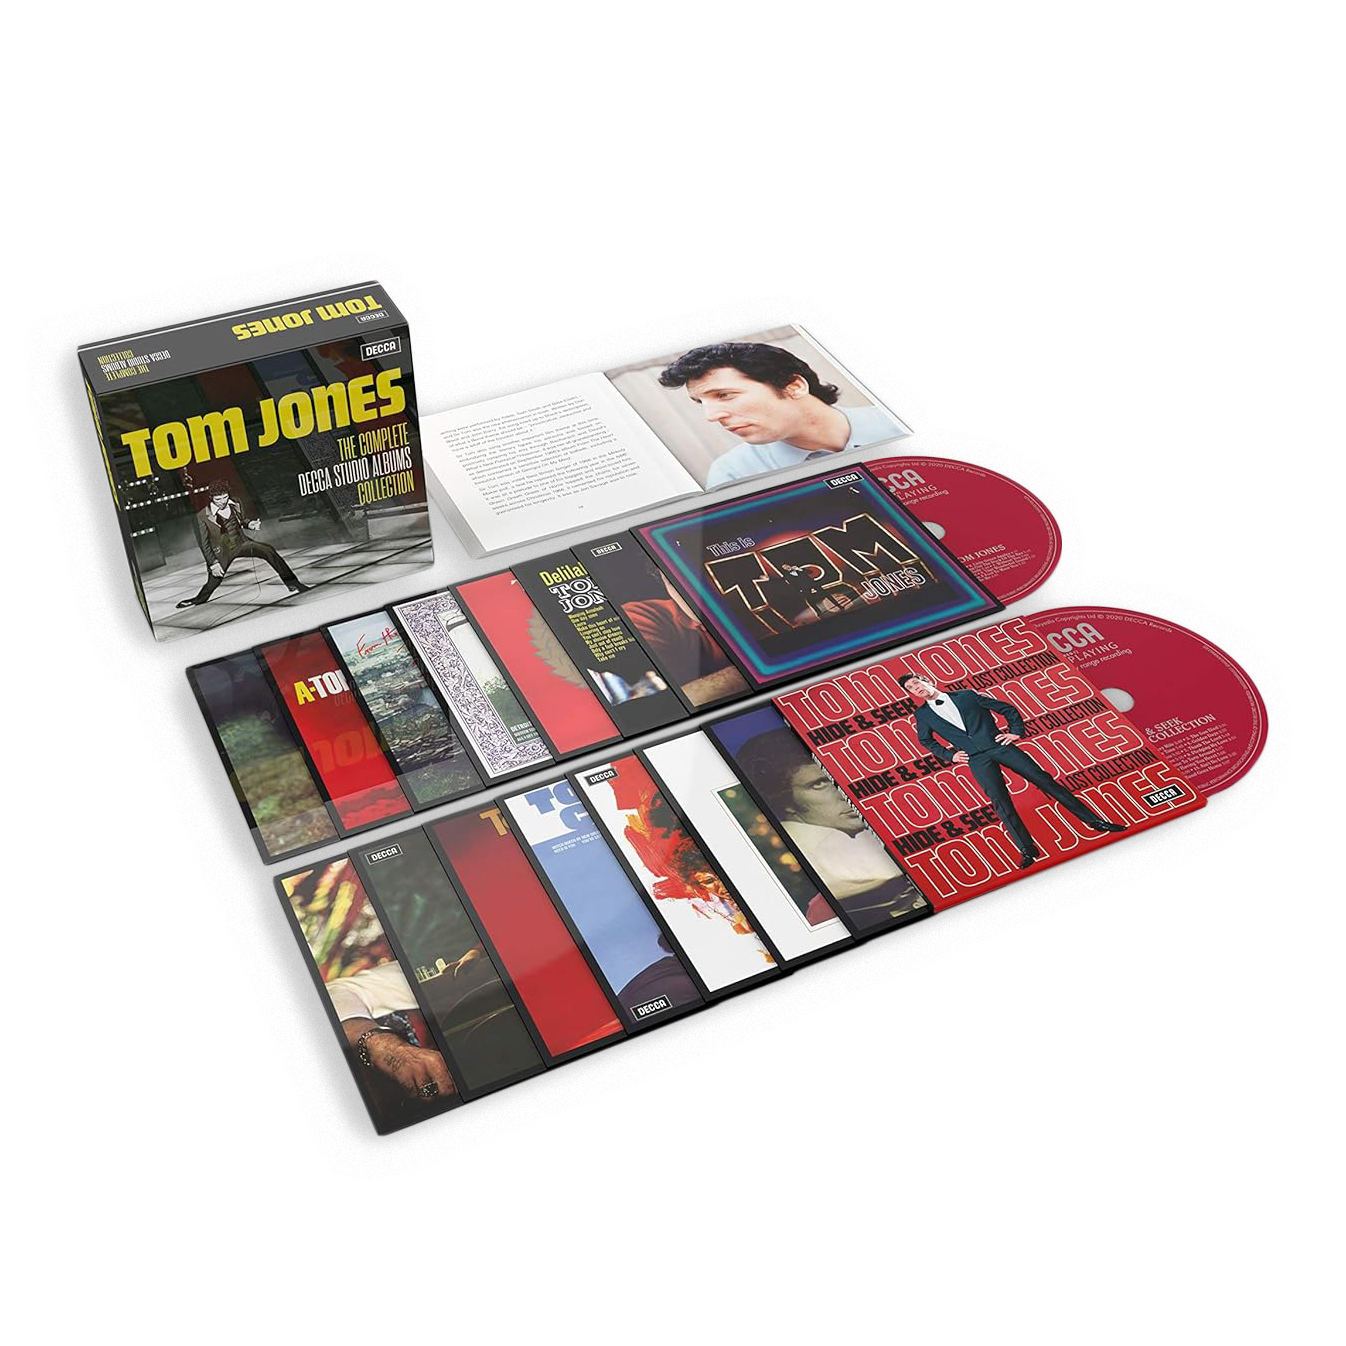 Tom Jones - The Complete Decca Studio Albums Collection: 17CD Box Set